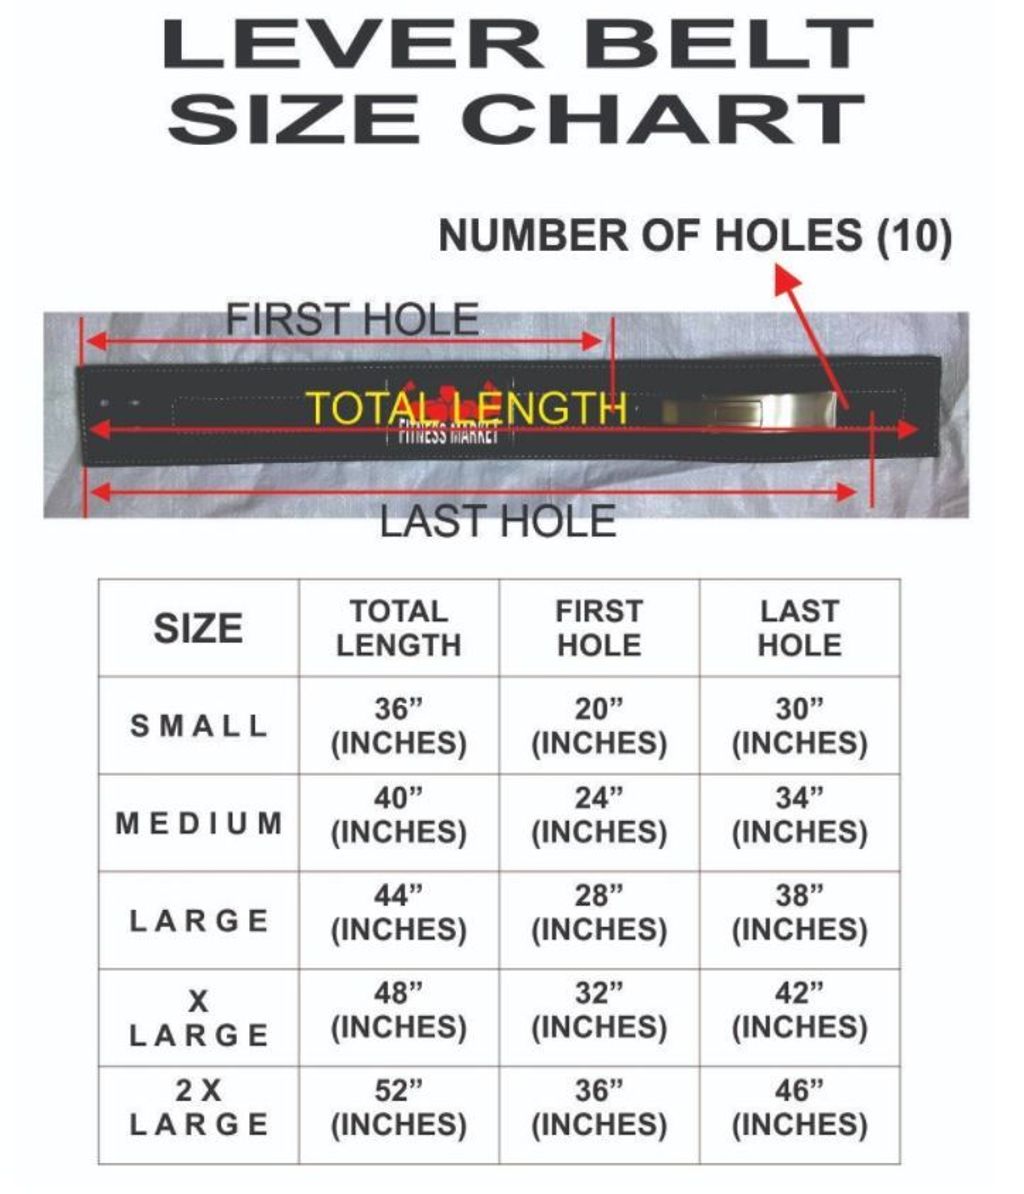 Lever belt Size chart.JPG